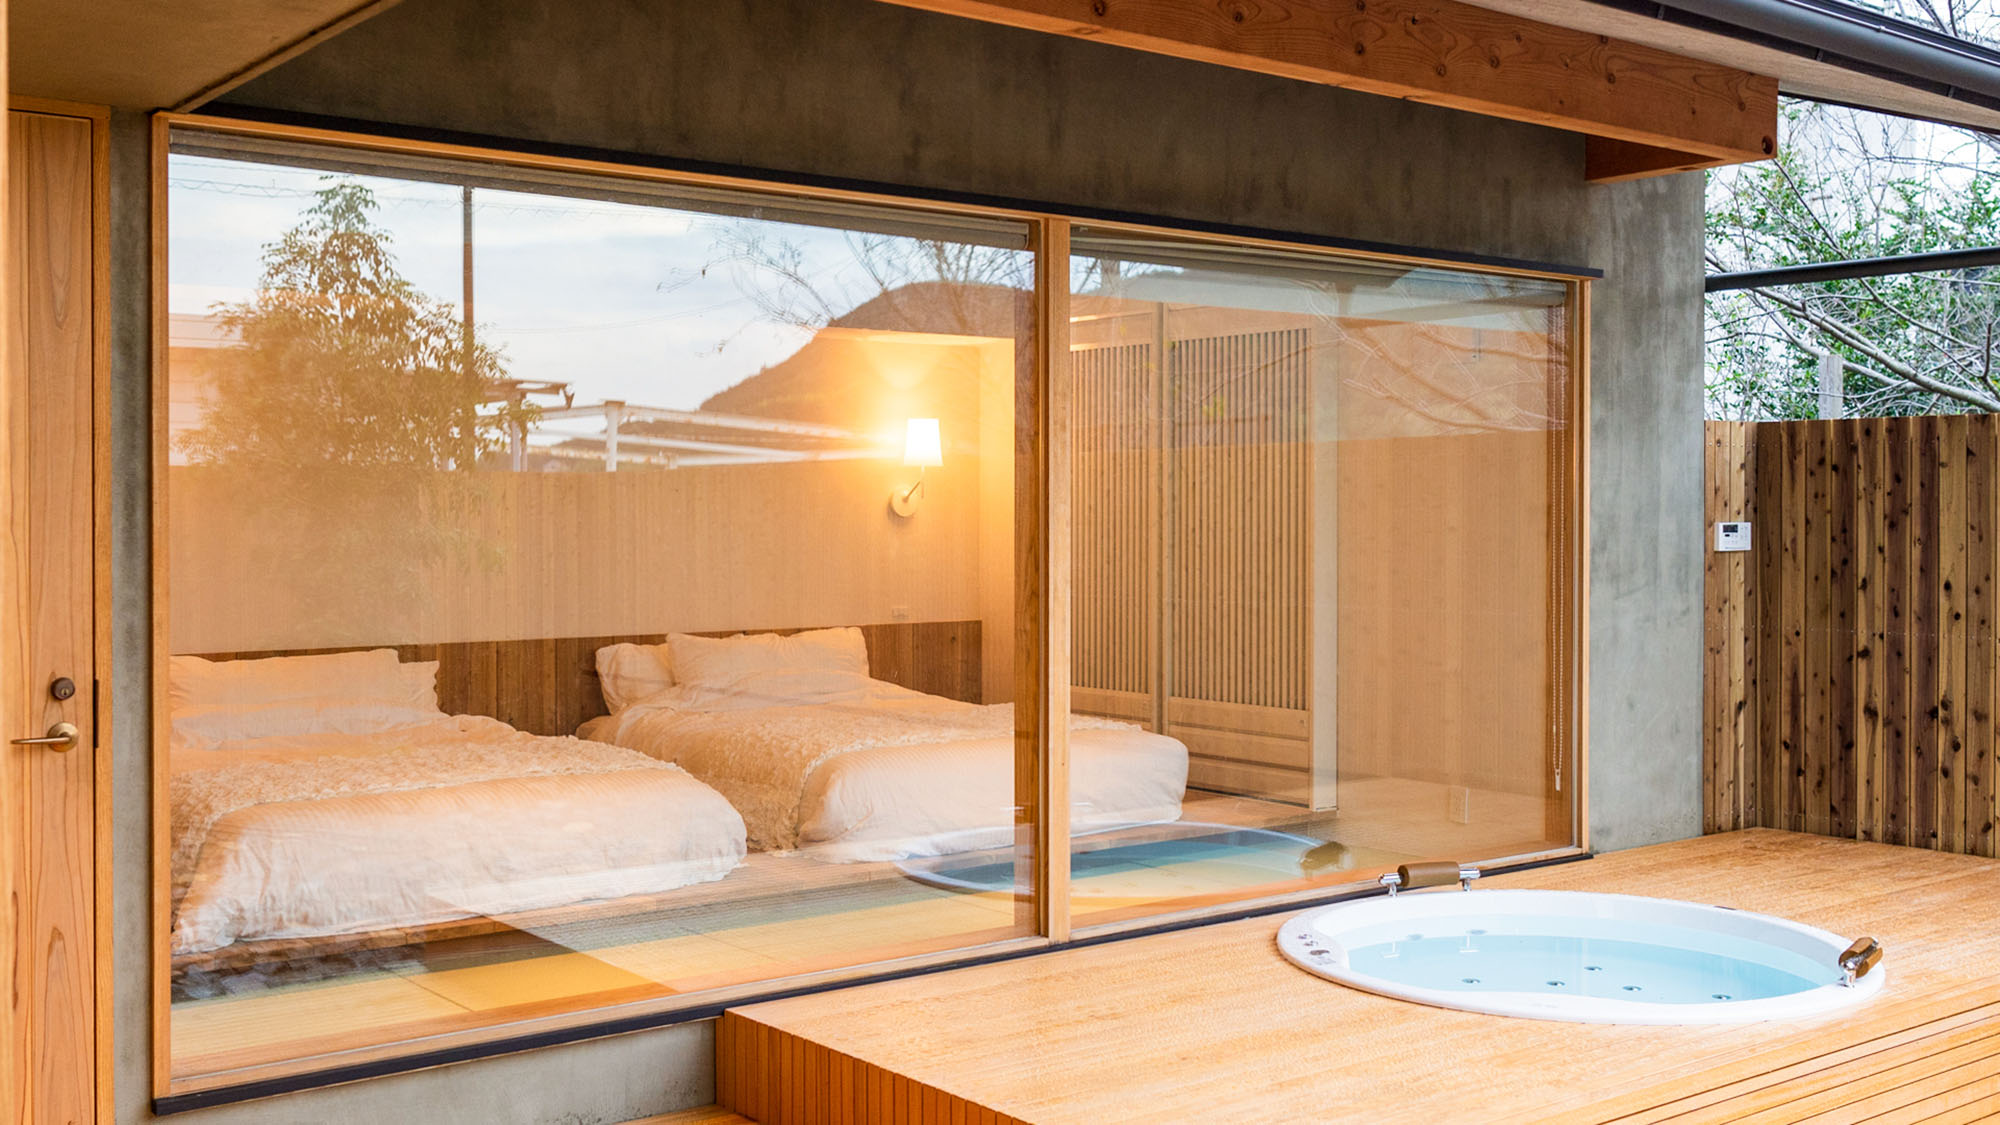 ・【Ameri】採光十分な大きなガラス窓の寝室。気持ちの良い自然光を浴びれる空間です